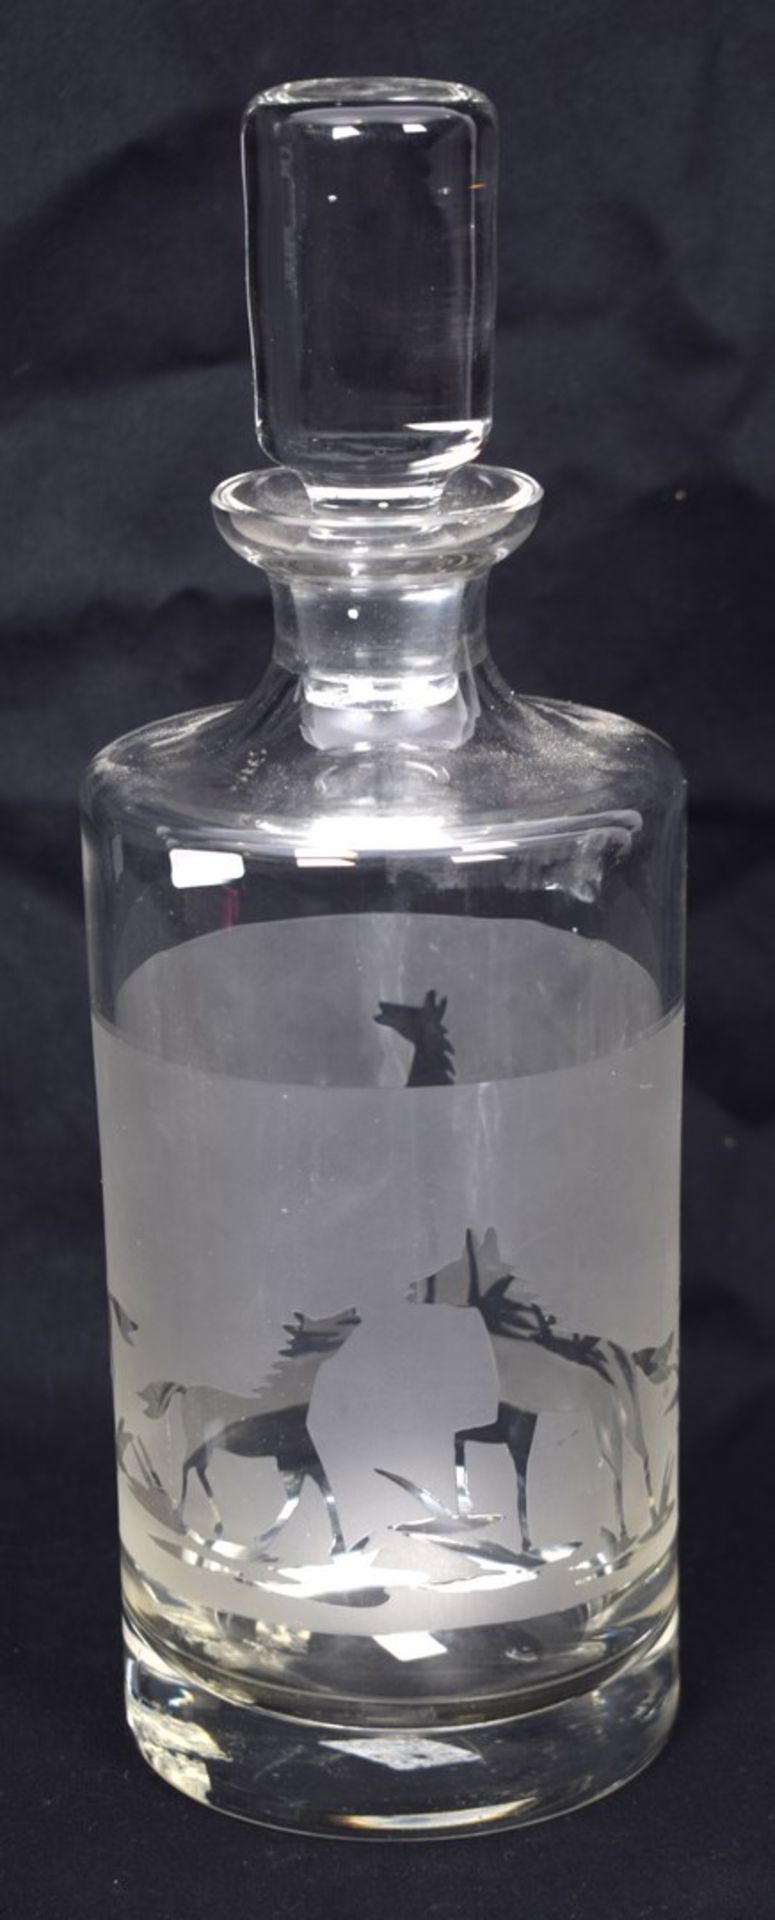 Karaffefarbl. Kristallglas, zylindrische Form, geschliffen, Wandung mit Tiermotiven verziert, H 28